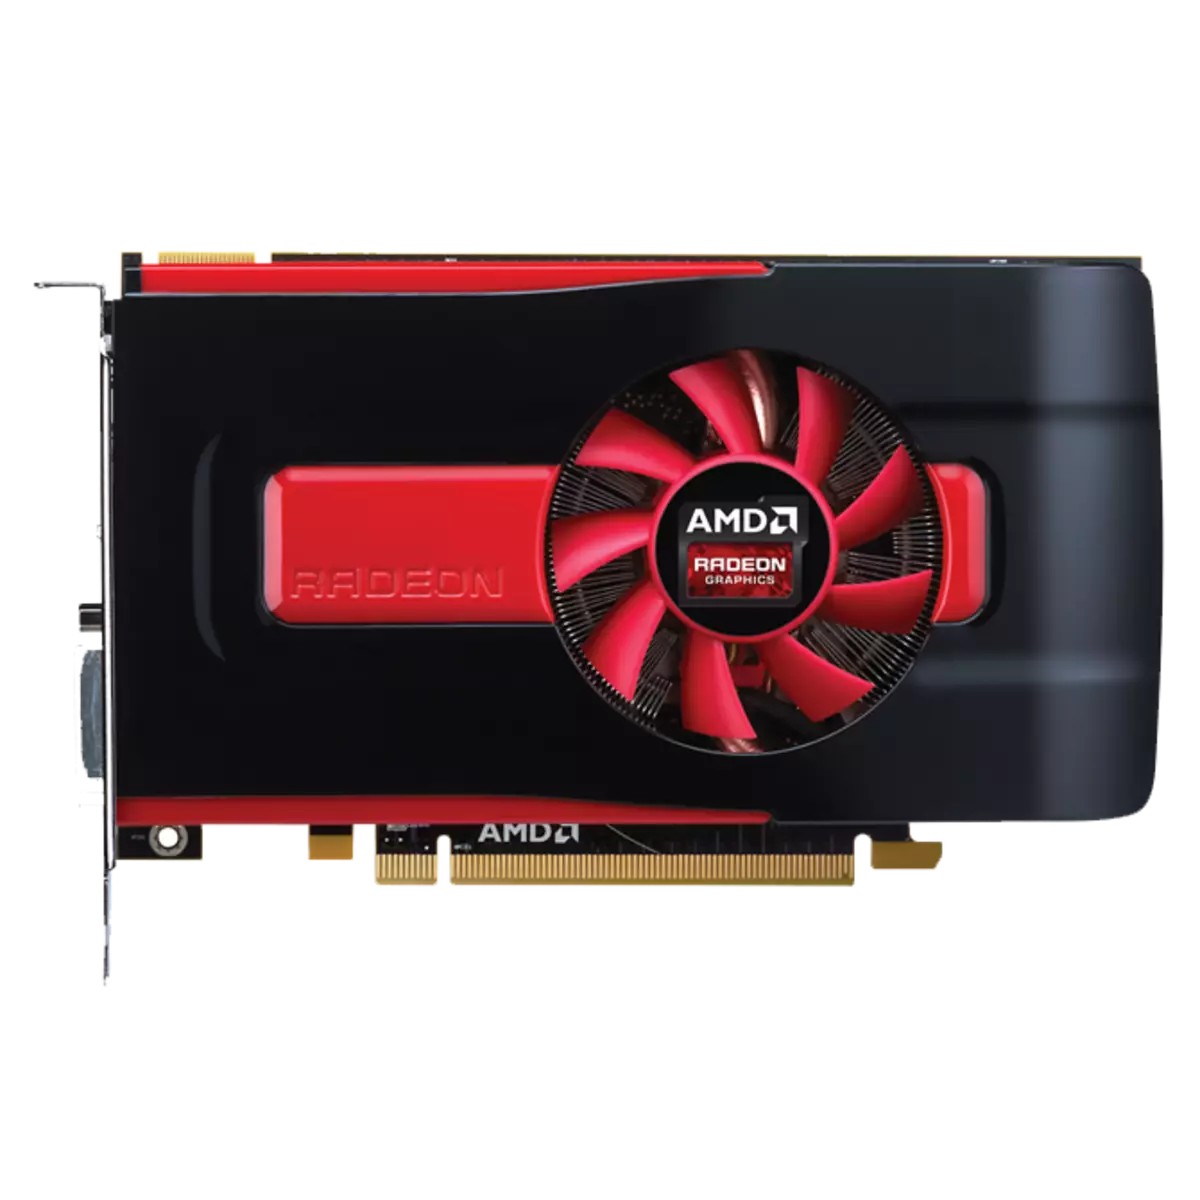 Baixar drivers para a série AMD Radeon HD 7700